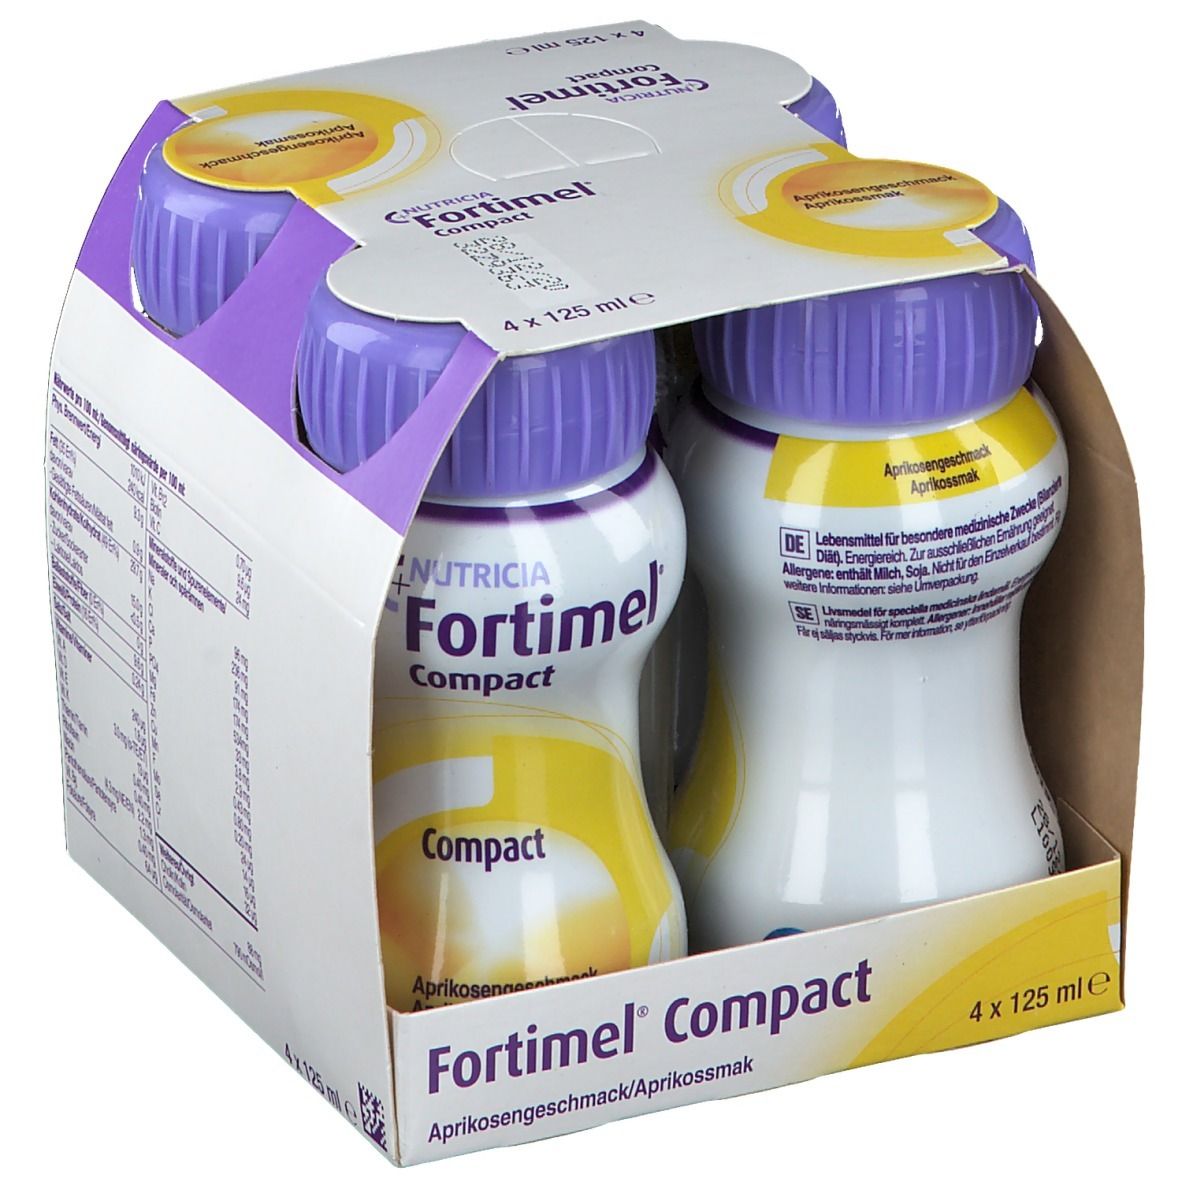  Fortimel® Compact 2.4 Trinknahrung Aprikose